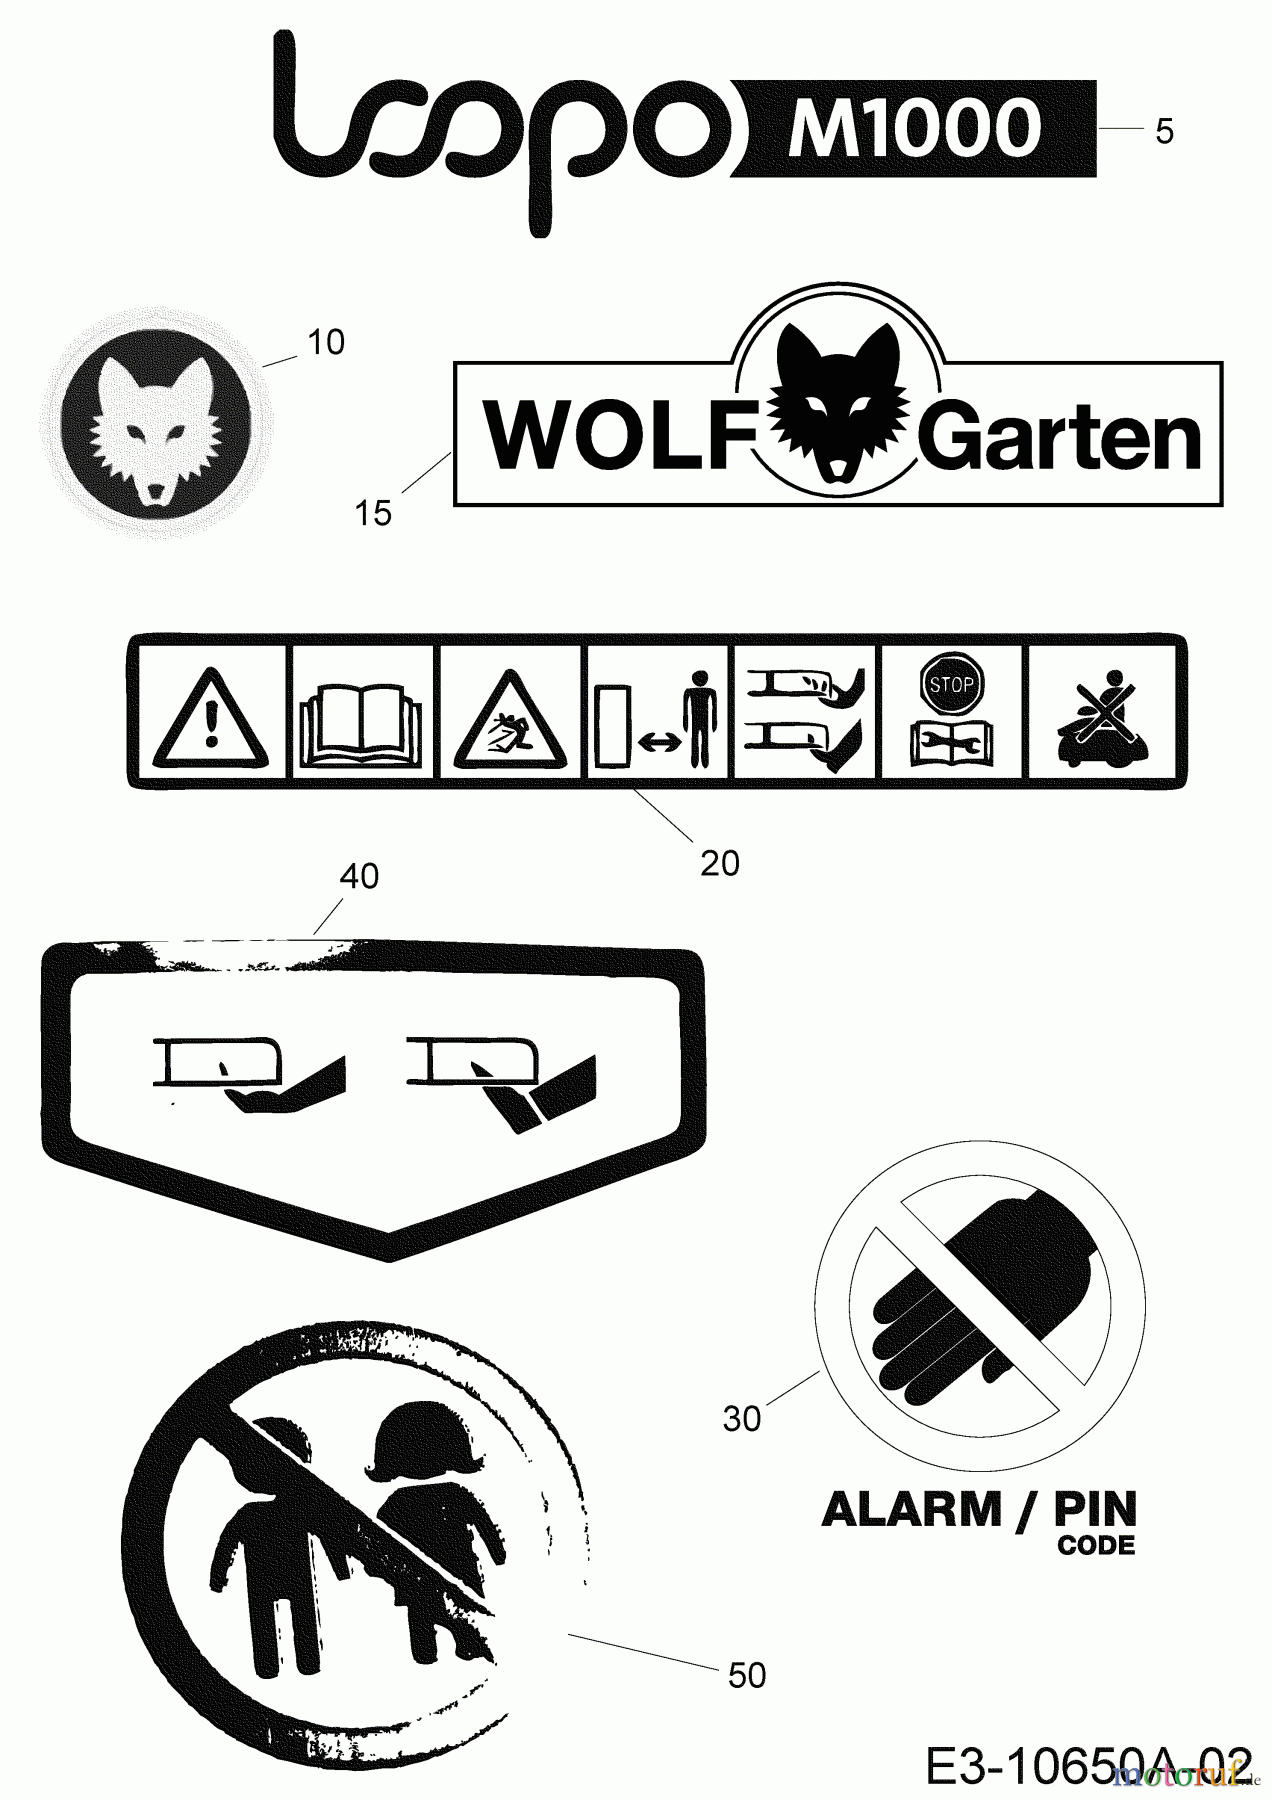  Wolf-Garten Robotic lawn mower Loopo M1000 22CCBA-A650 (2020) Labels